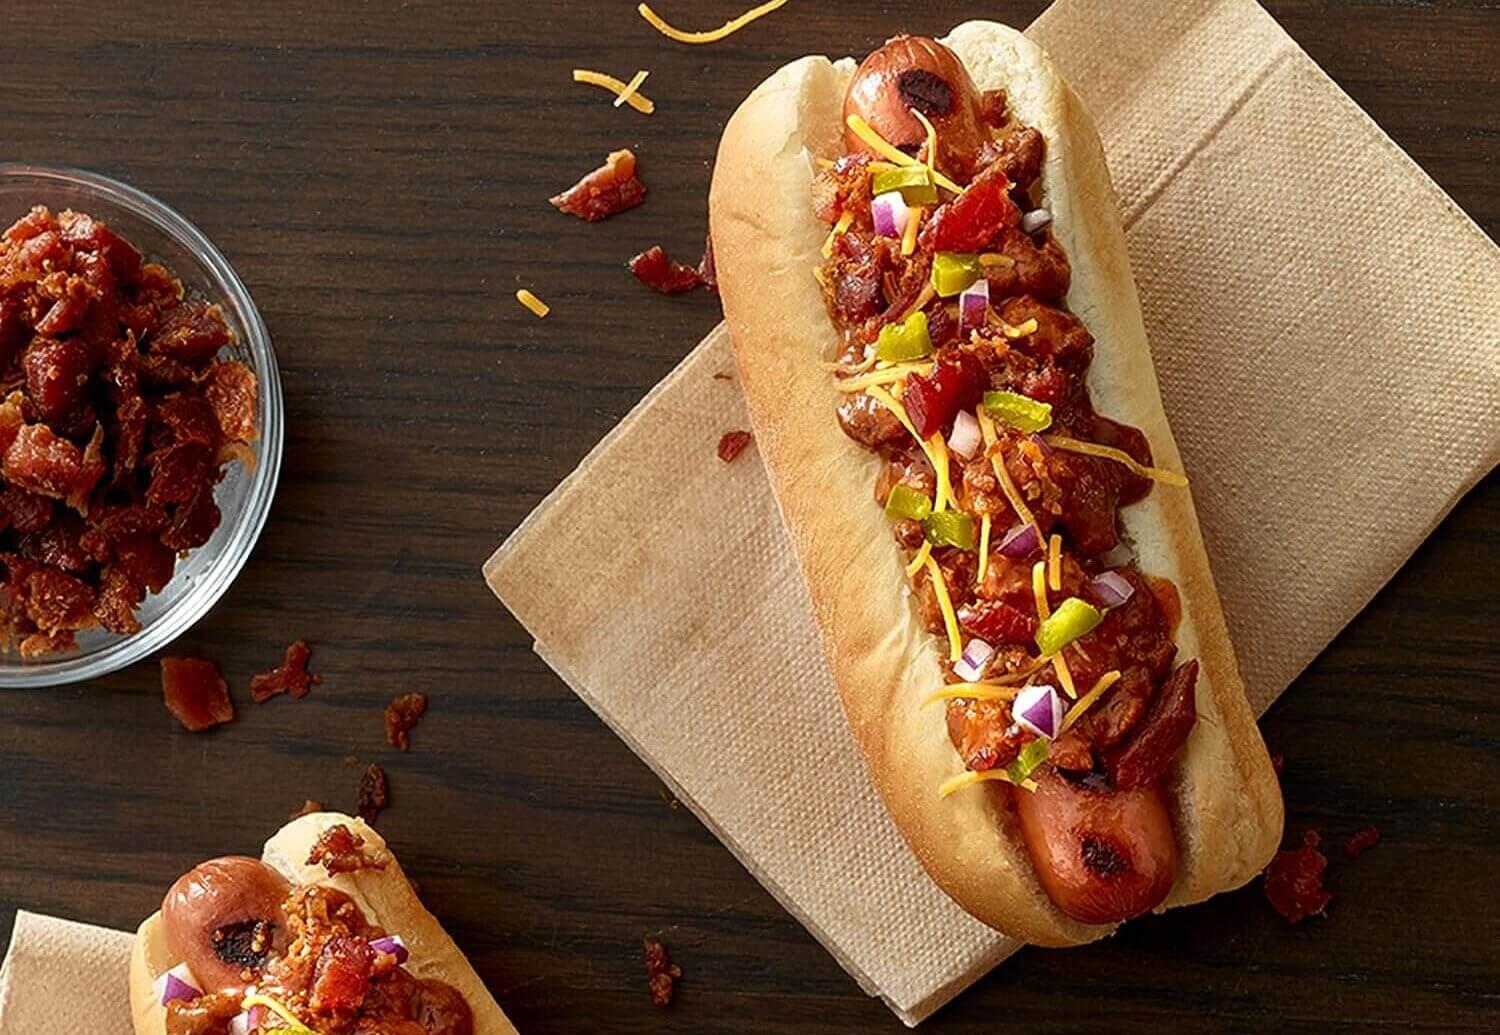 Hot dog with Hormel Chili on it